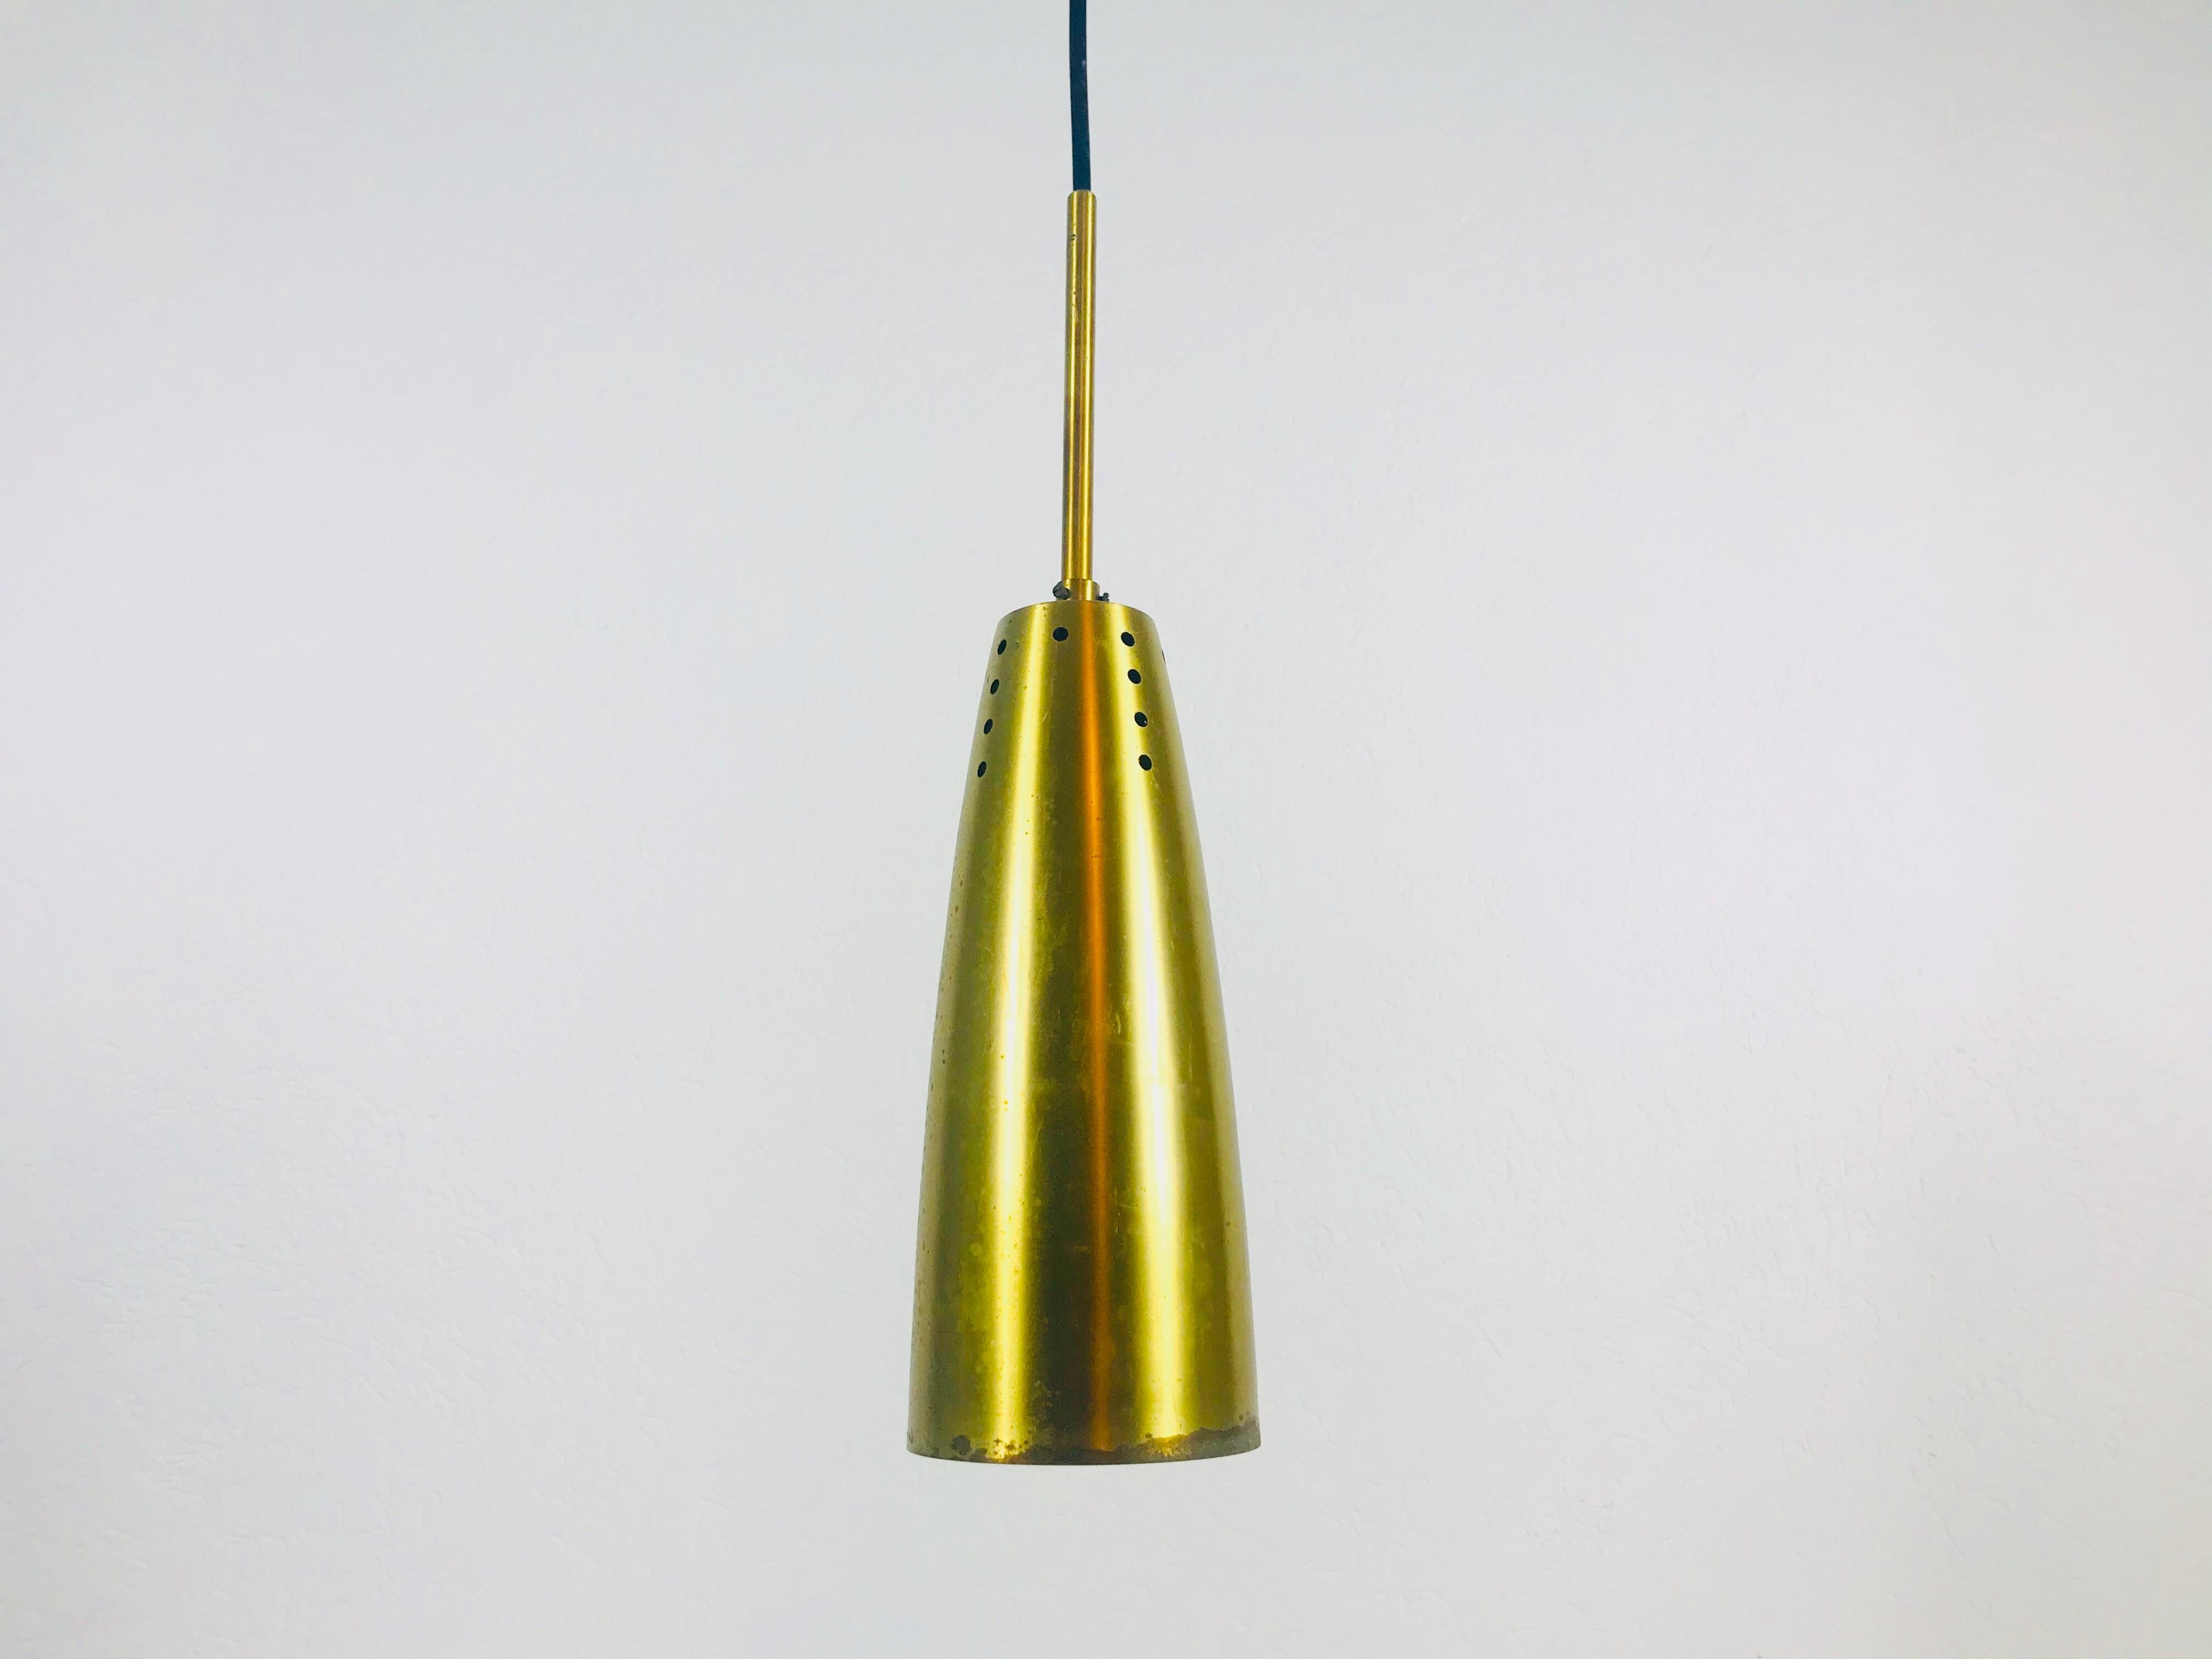 Set of 3 Full Brass Mid-Century Modern Pendant Lamps, 1950s, Germany For Sale 3